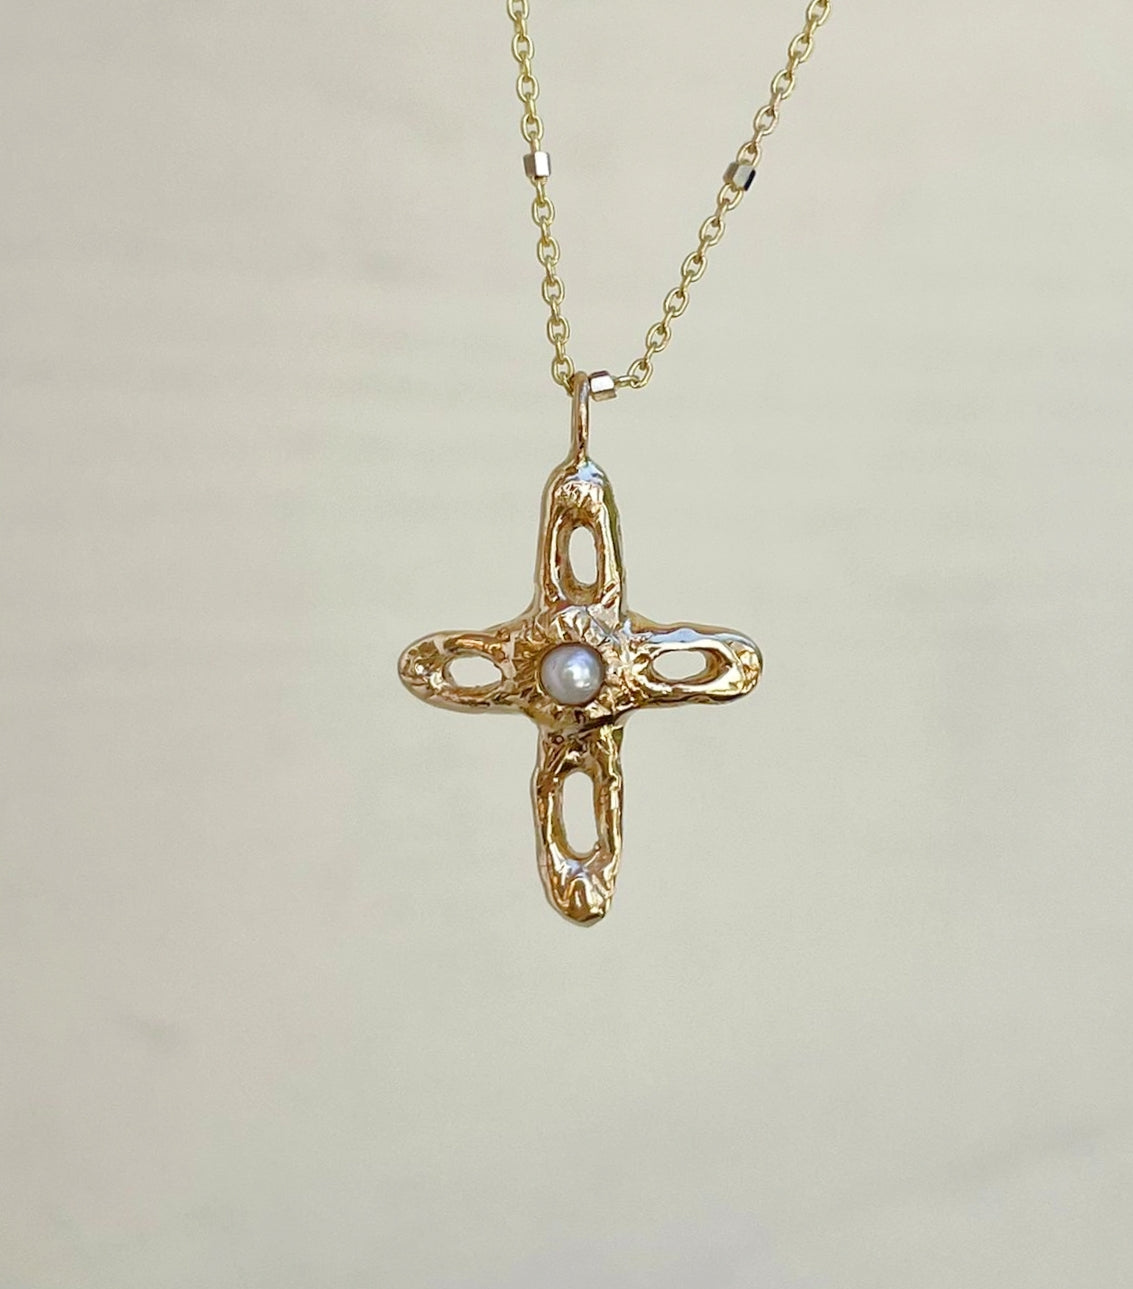 The Spirit of Ohana Cross Necklace